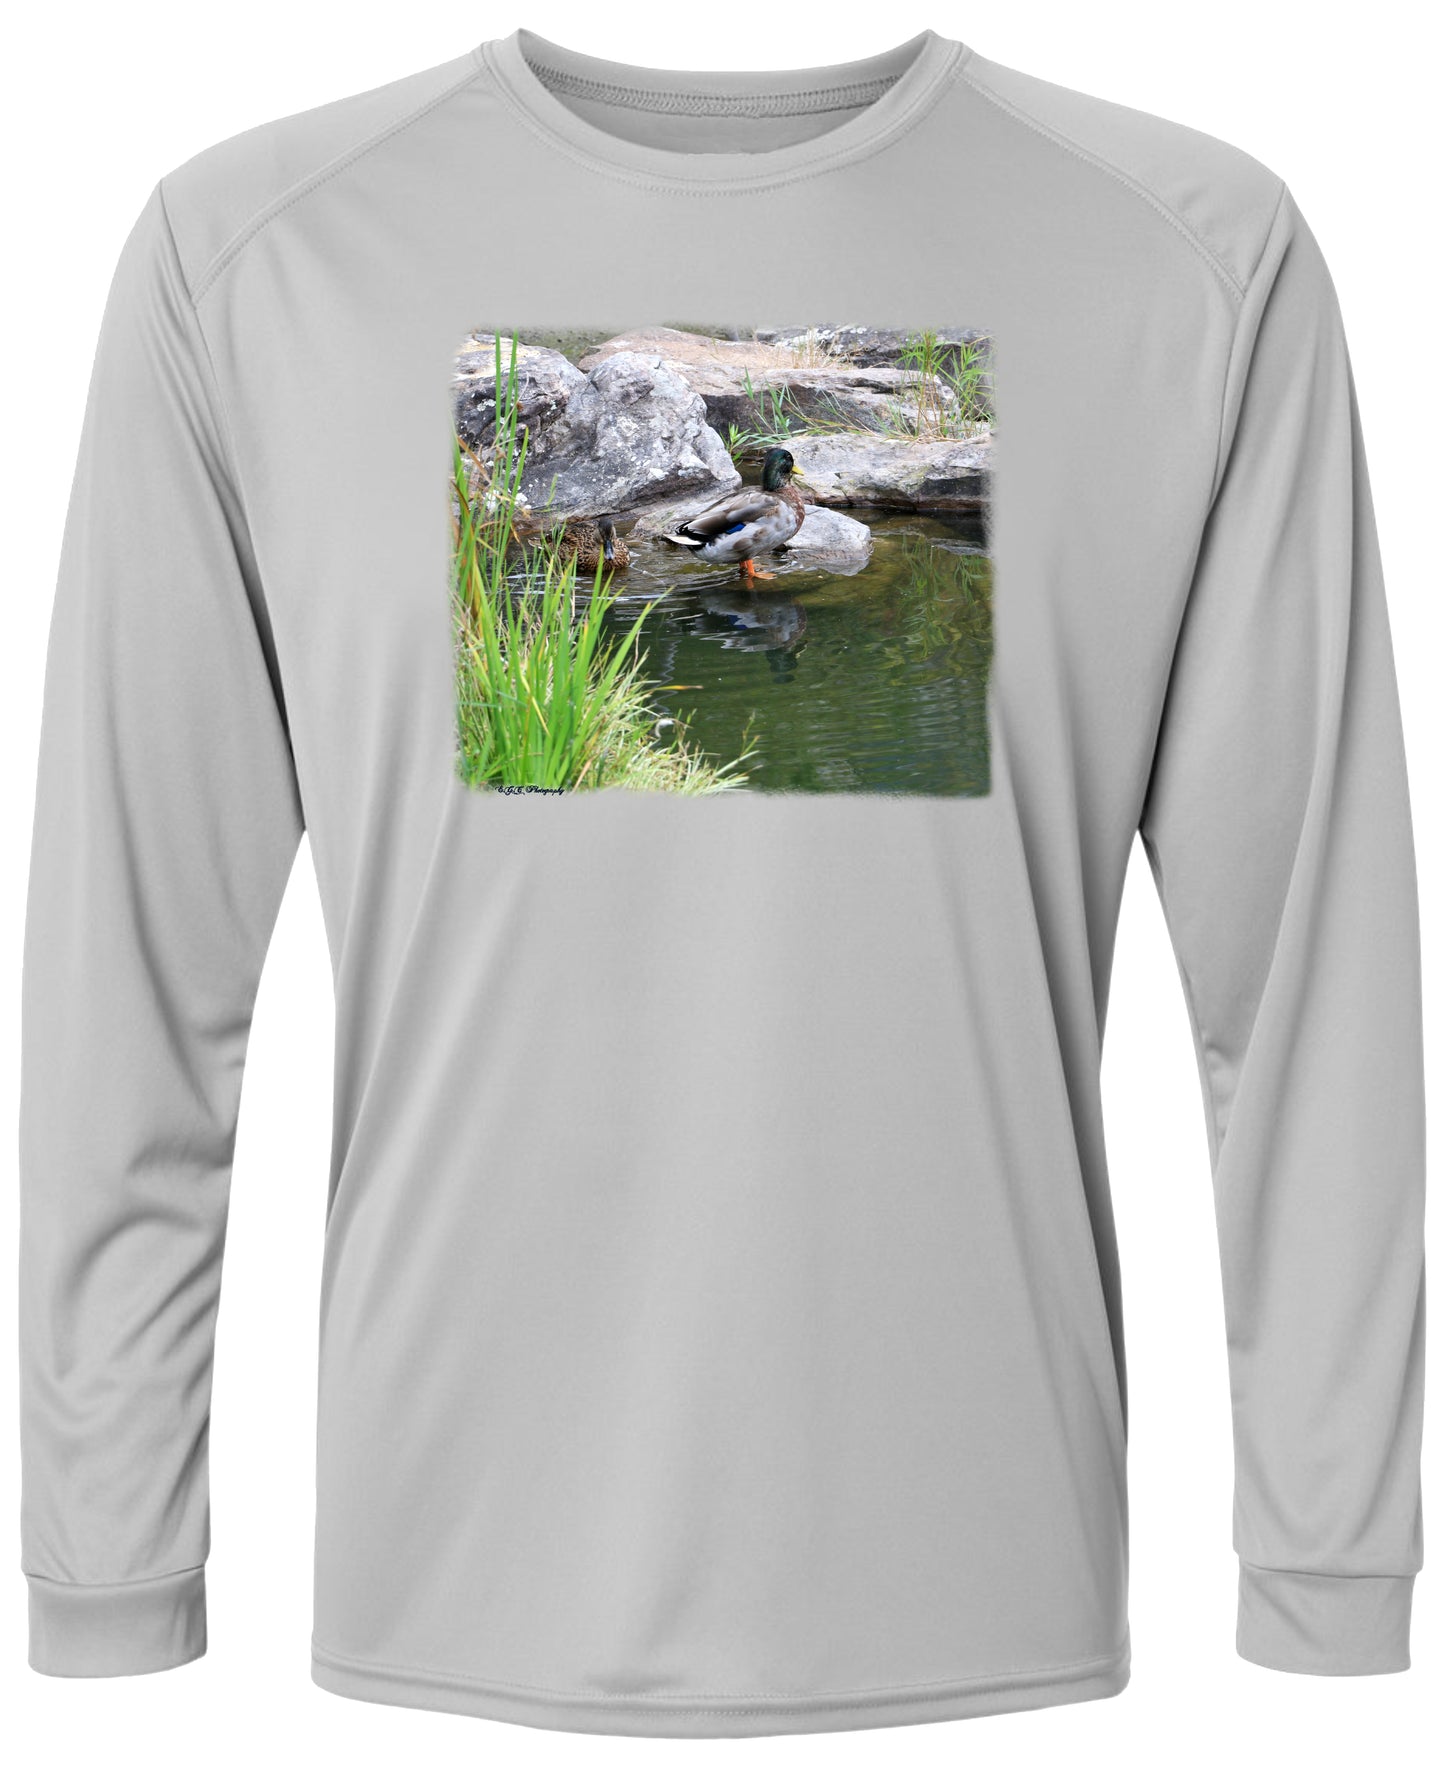 46 LM Duck Long Sleeve UPF 50+ Shirt Lake Shirt Fishing Shirt Duck Shirt Duck Hunting Shirt